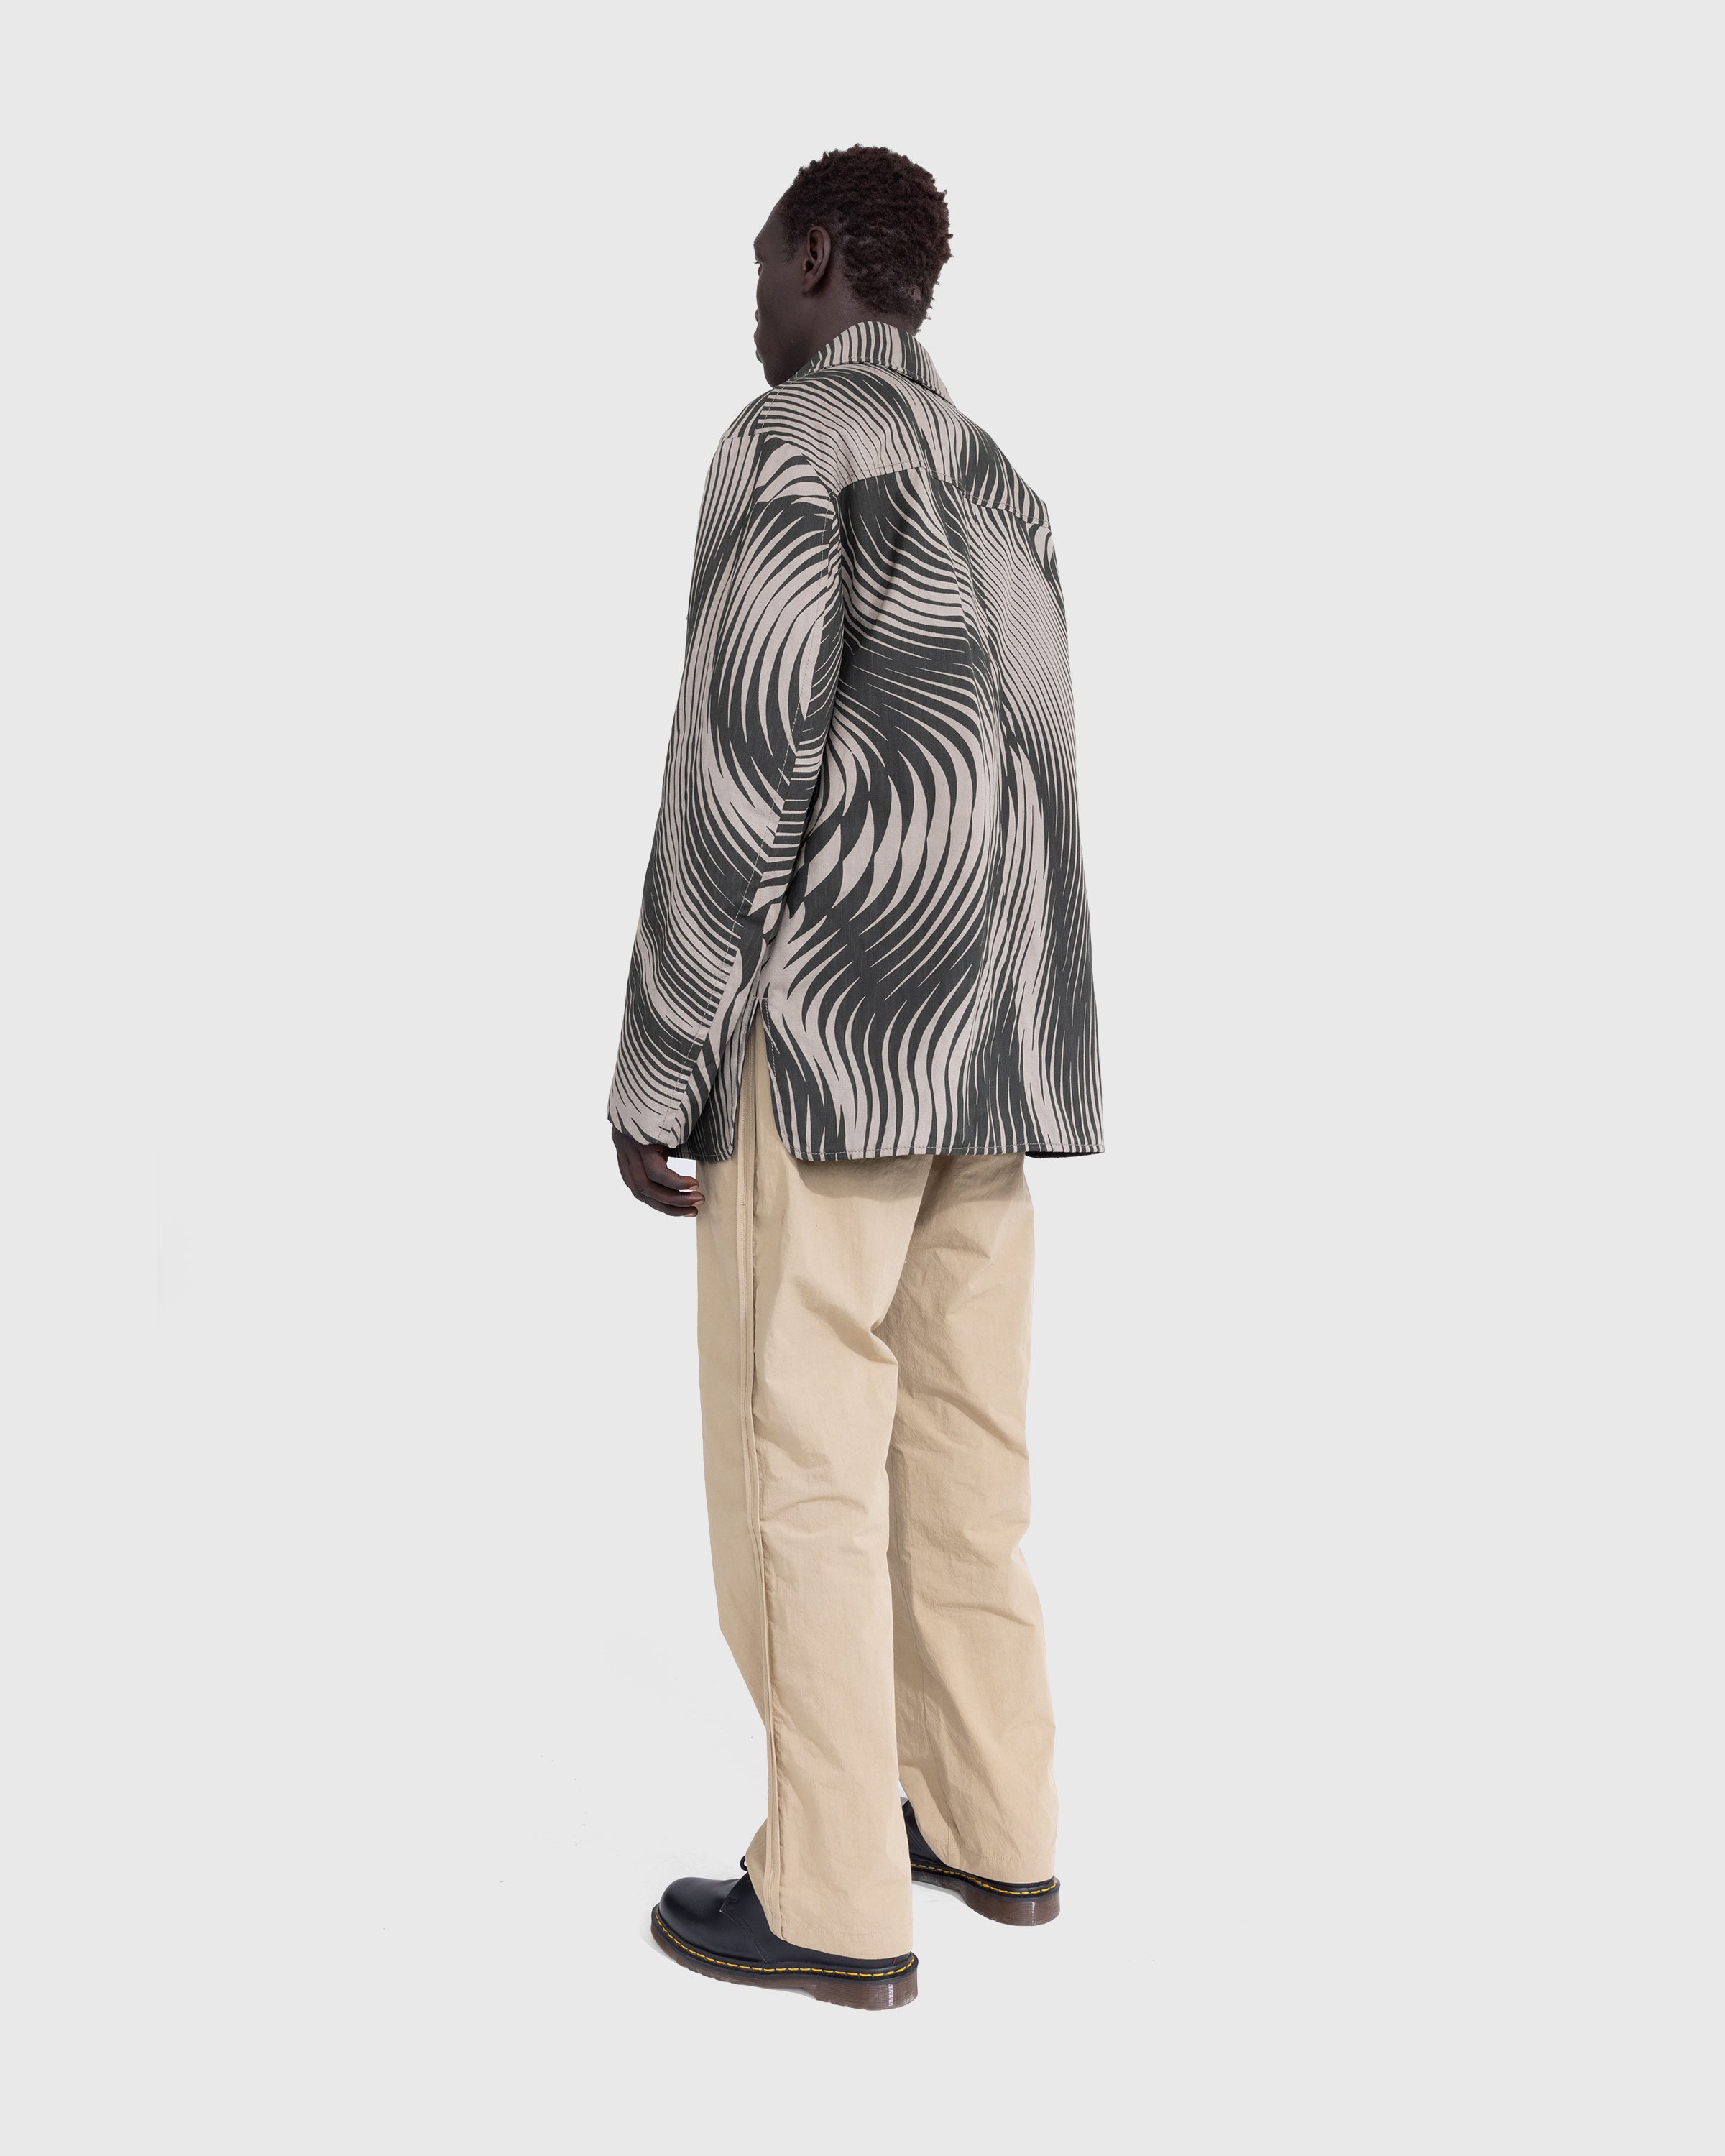 Dries van Noten - Valko Jacket Anthracite - Clothing - Grey - Image 4